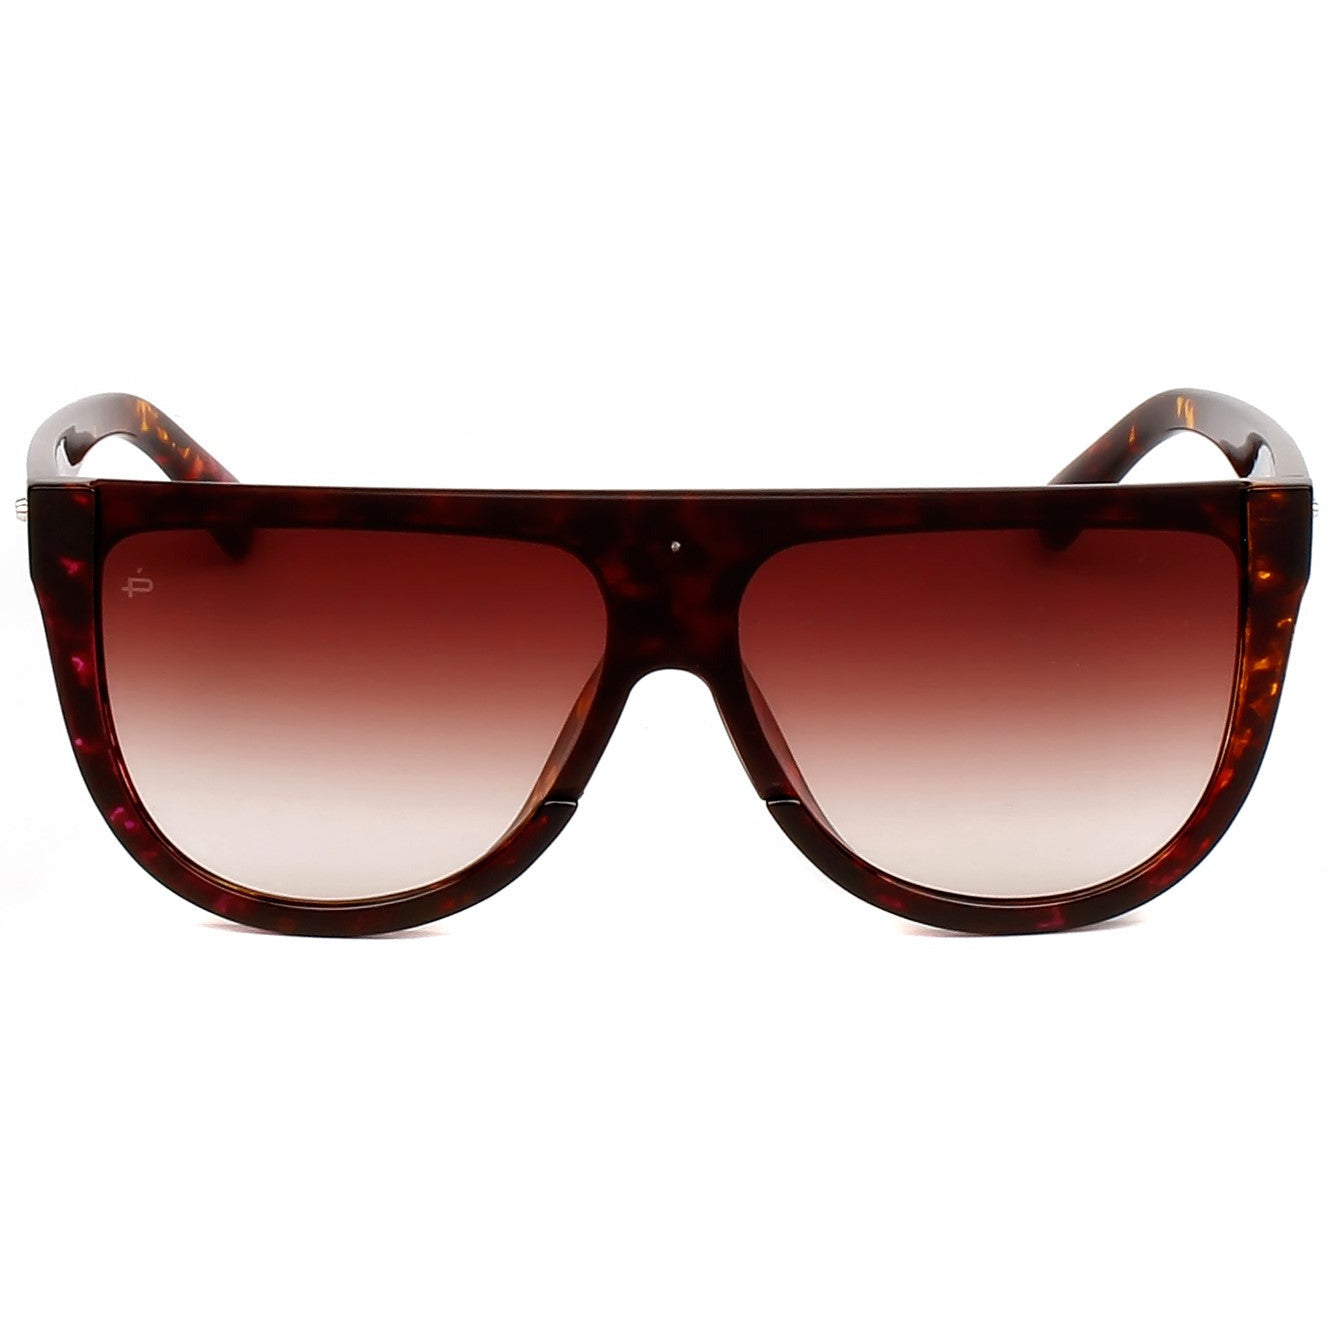 PRIVE REVAUX COCO / Majestic Purple Tortoise Sunglasses